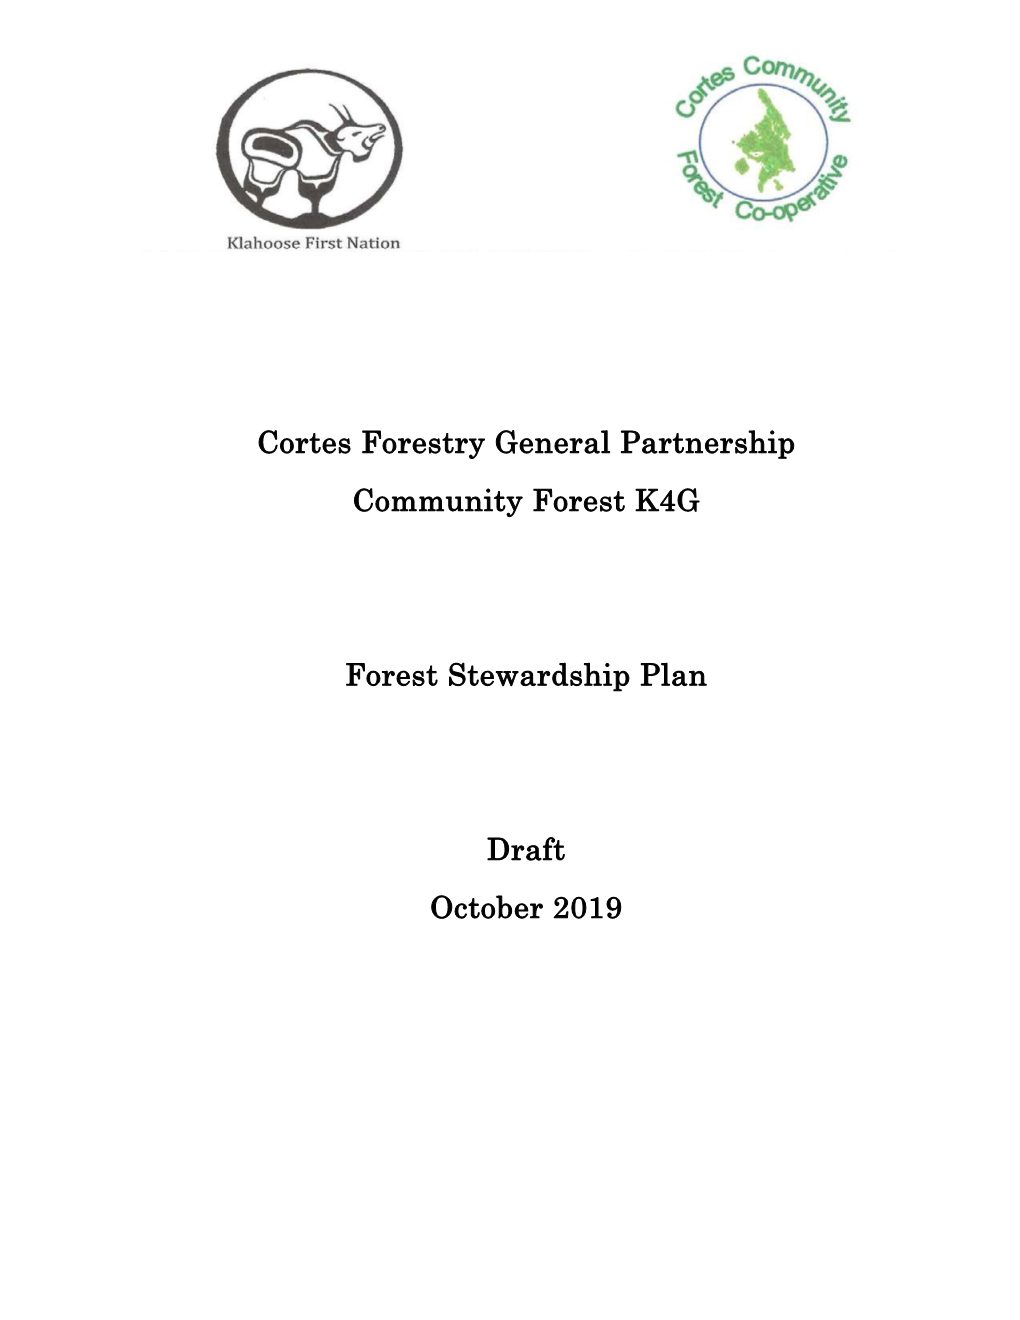 Cortes Forestry General Partnership FSP Draft October 2019